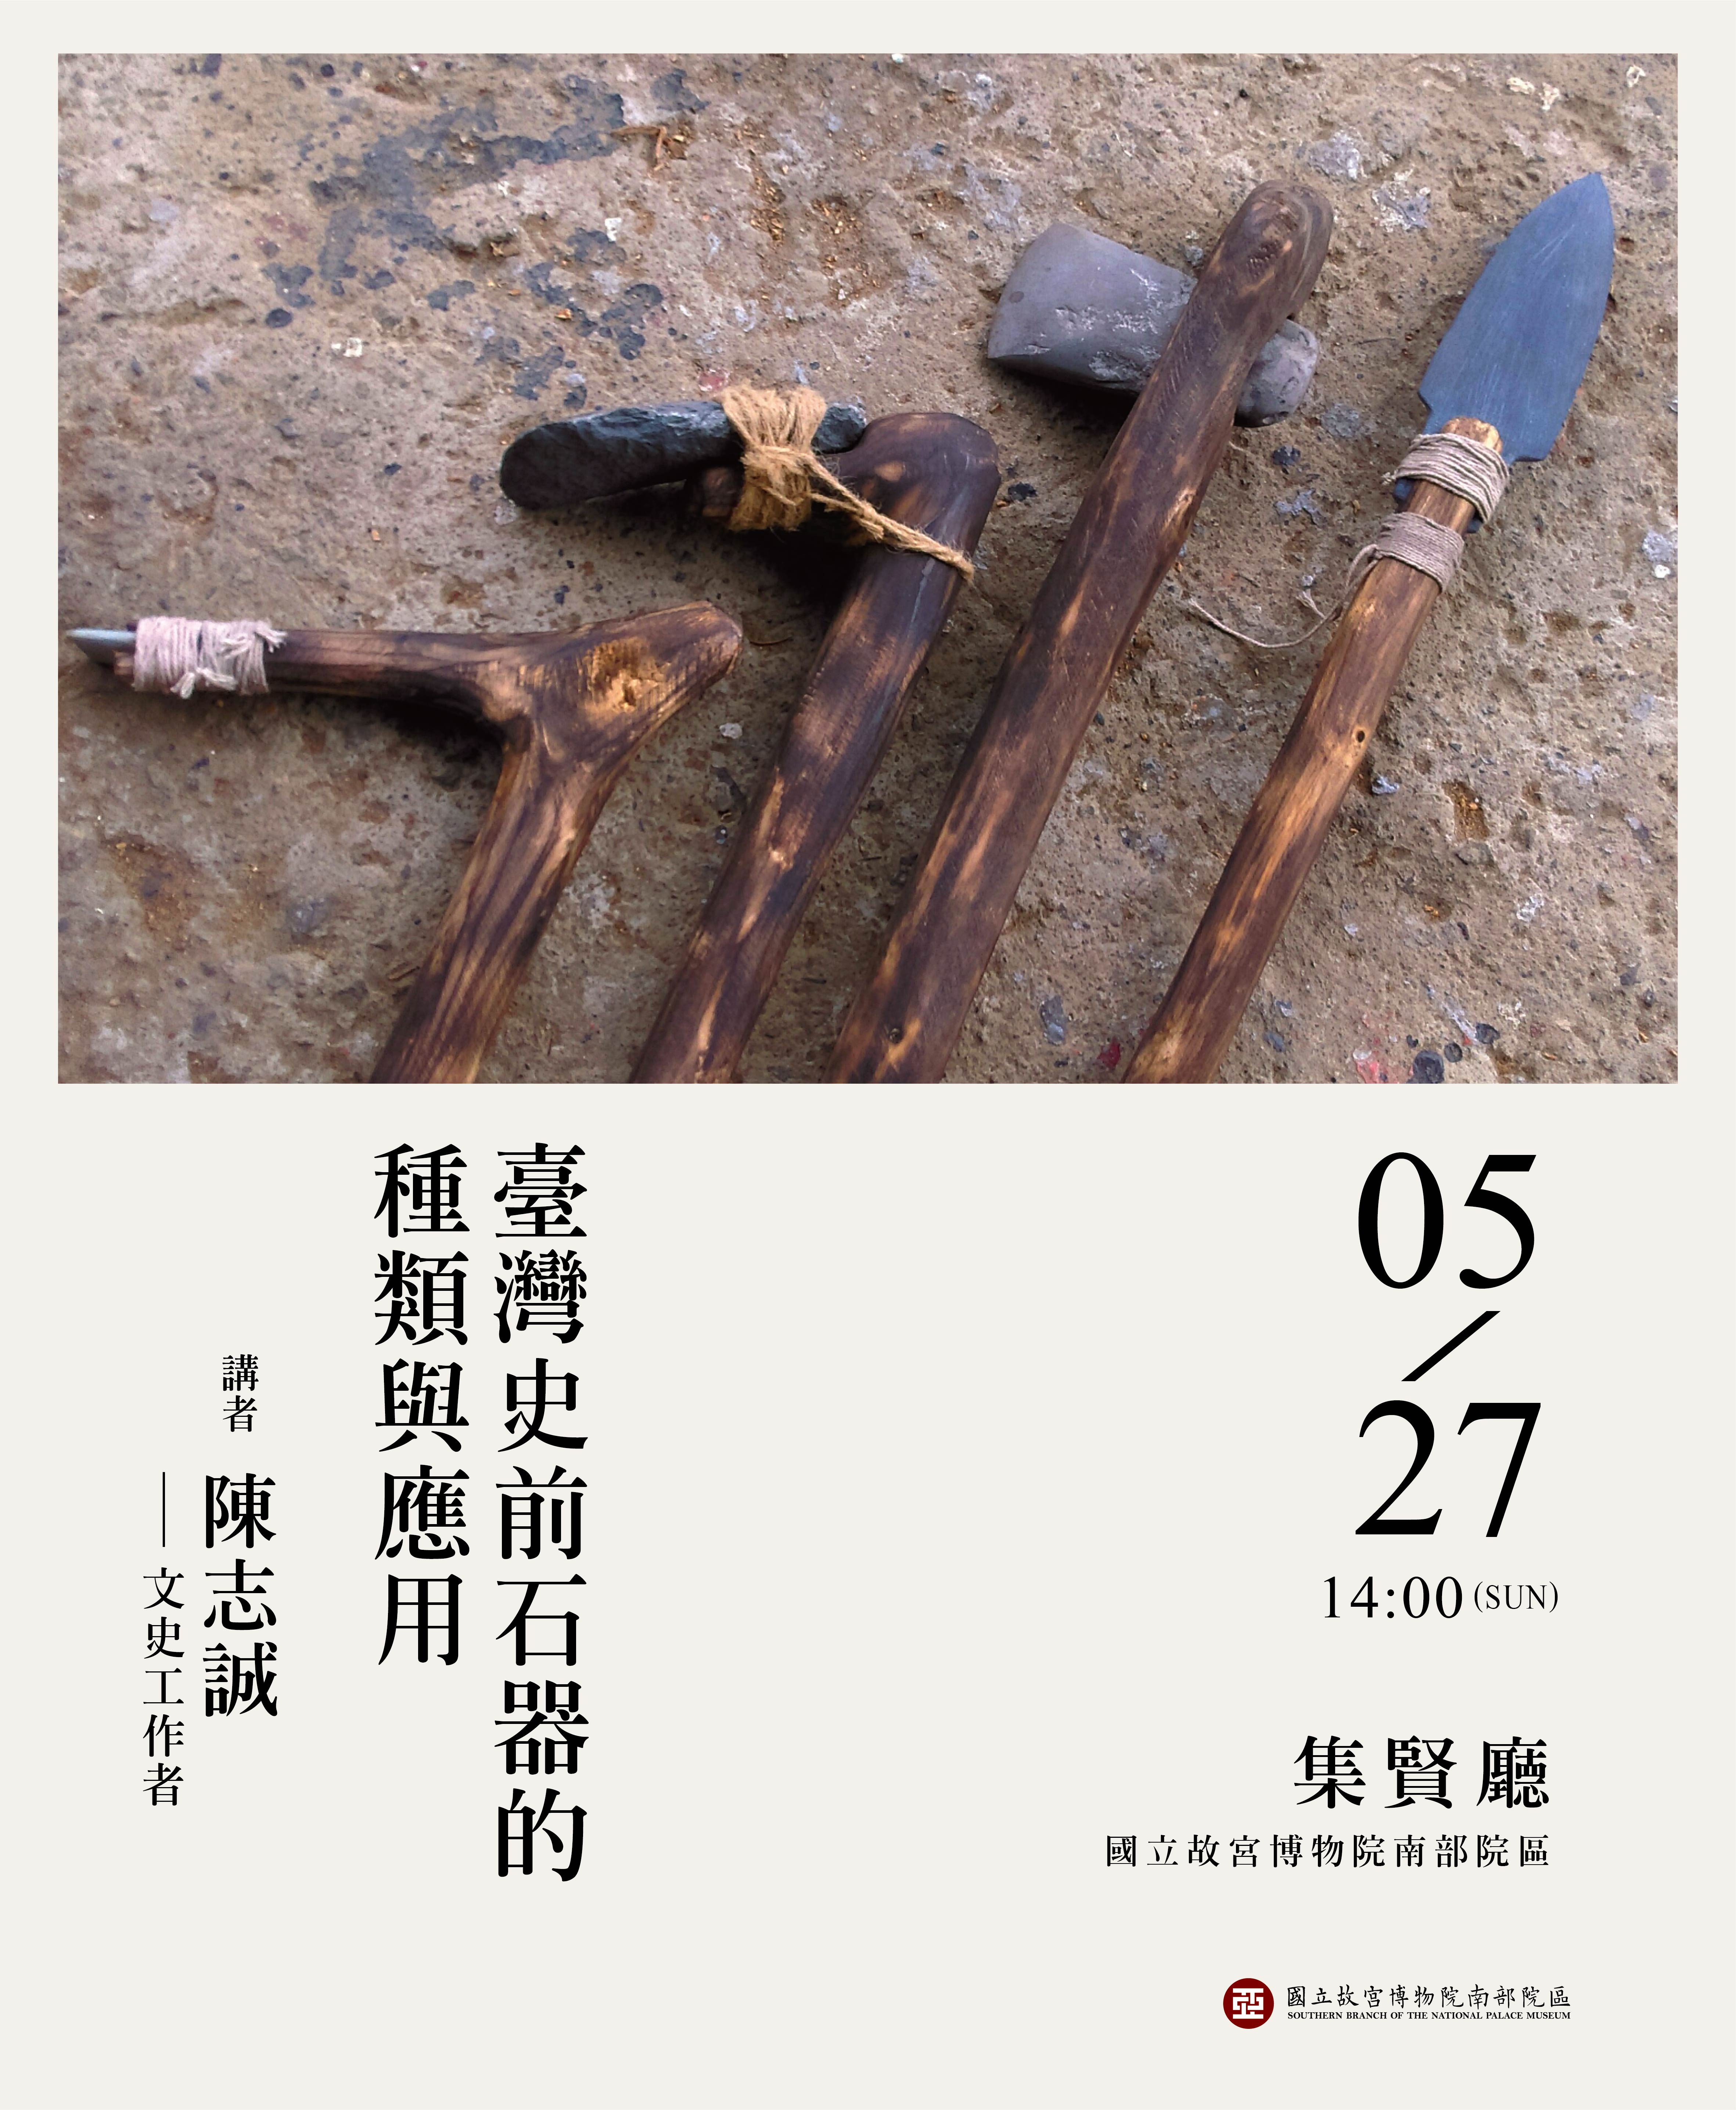 Photo: 臺灣史前石器的種類與應用-海報.jpg